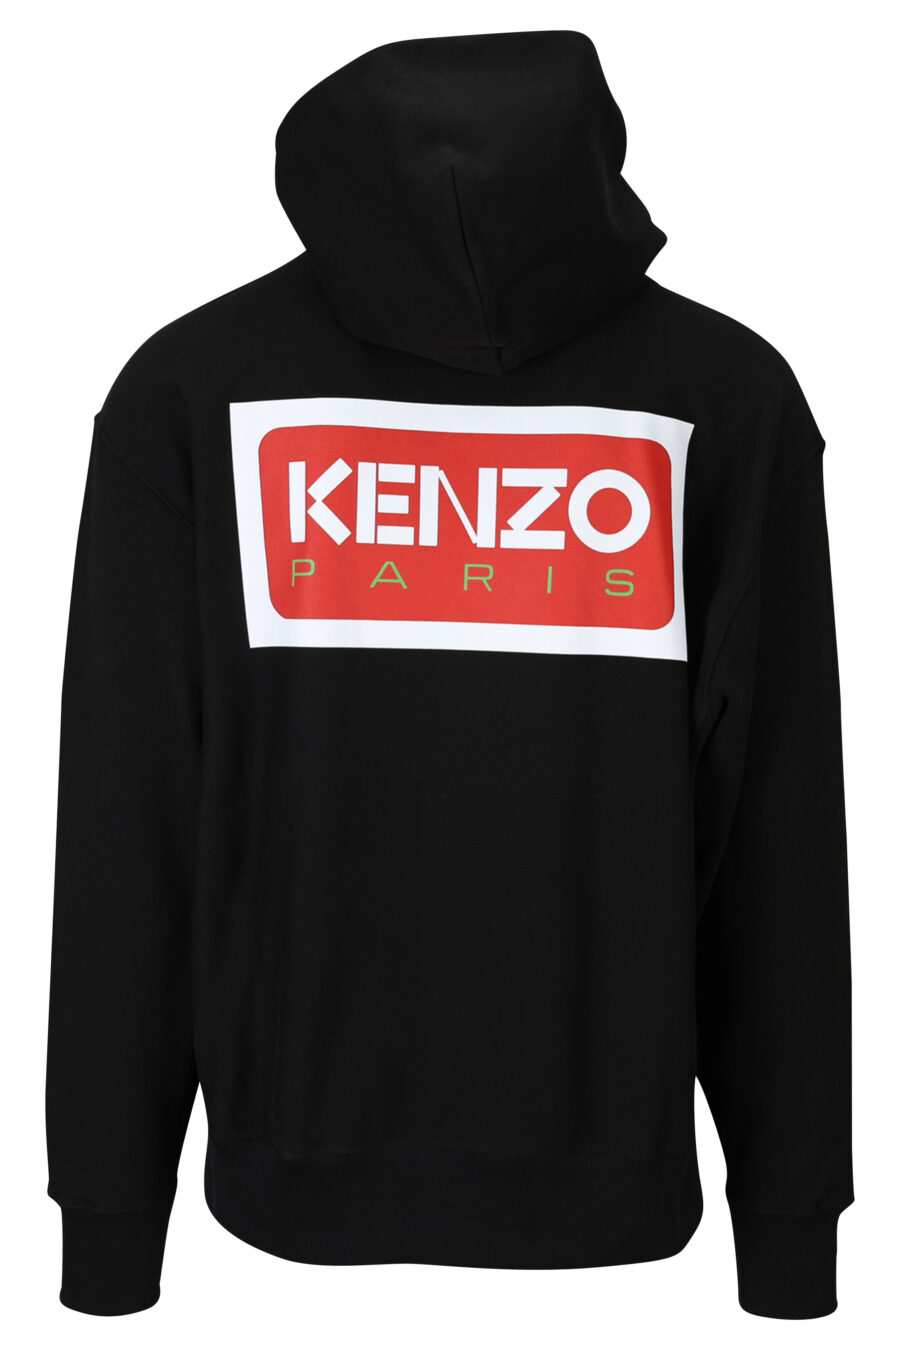 Black sweatshirt with hood and maxilogo "Kenzo Paris" on the back - 3612230537422 1